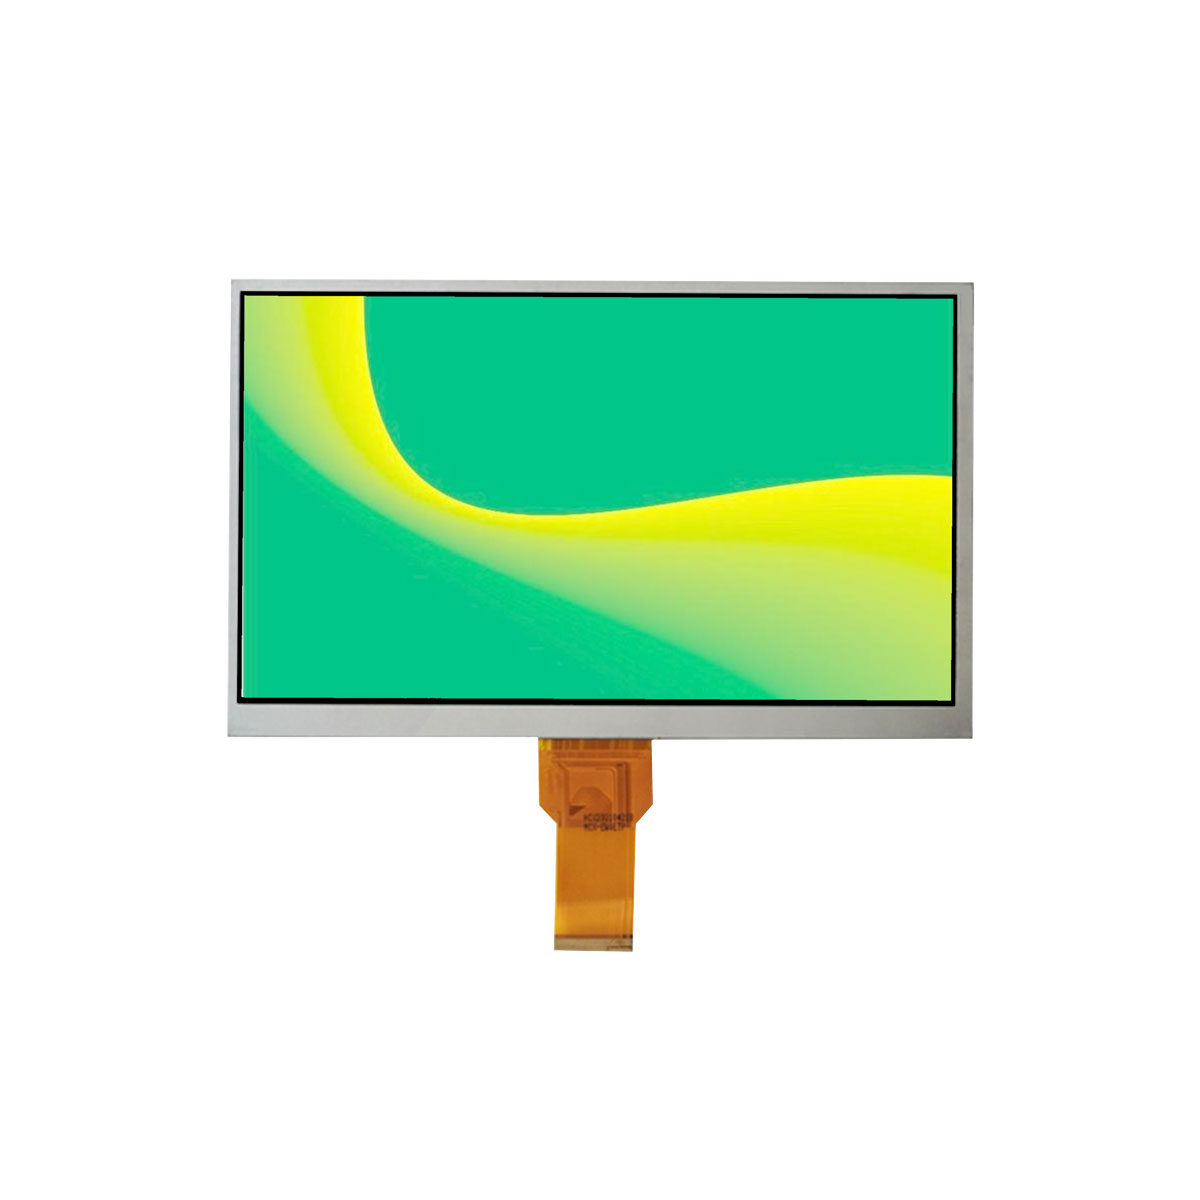 10.1 inch LCD instrument screen